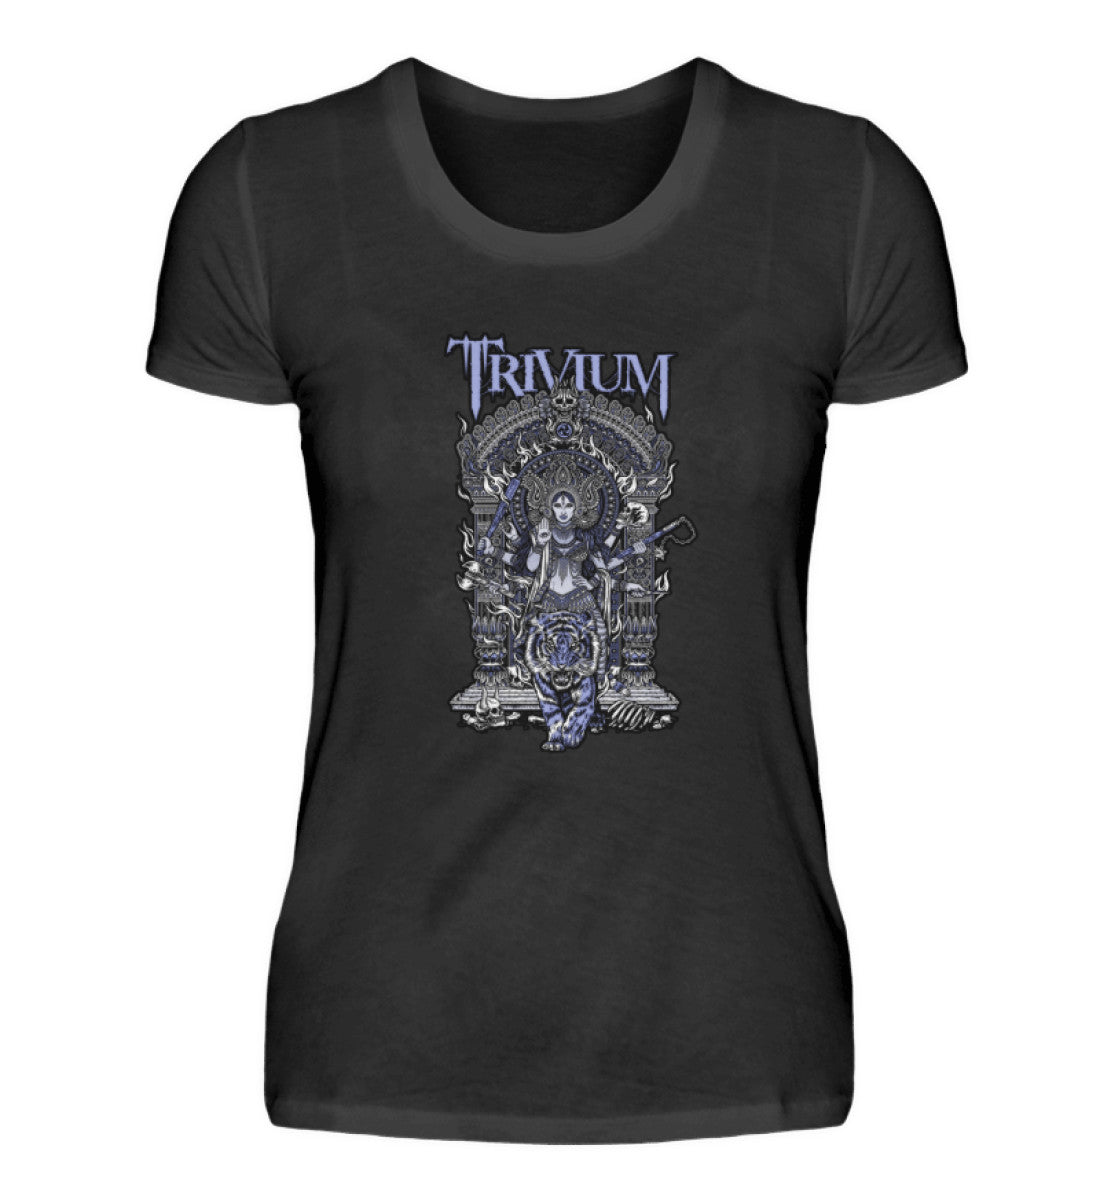 Trivium T-Shirt Women